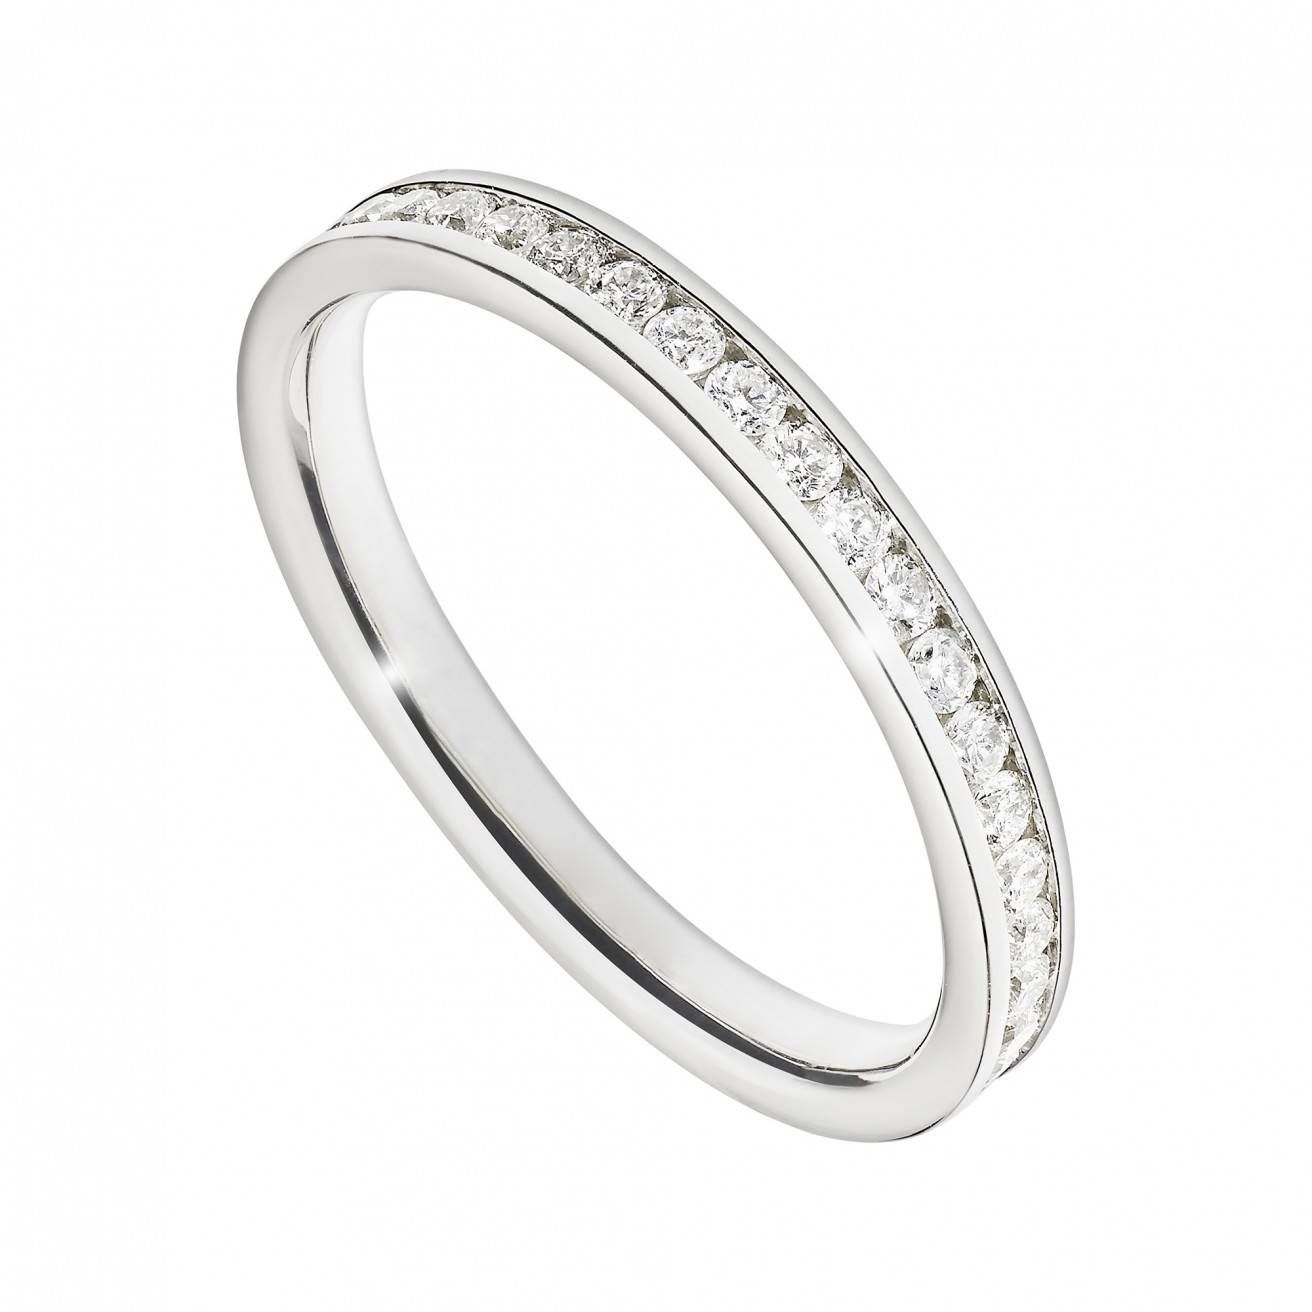 Buy Wedding Rings – Diamond, Platinum, Silver, Gold – Fraser Hart With Regard To Wedding Rings With Platinum Diamond (View 3 of 15)